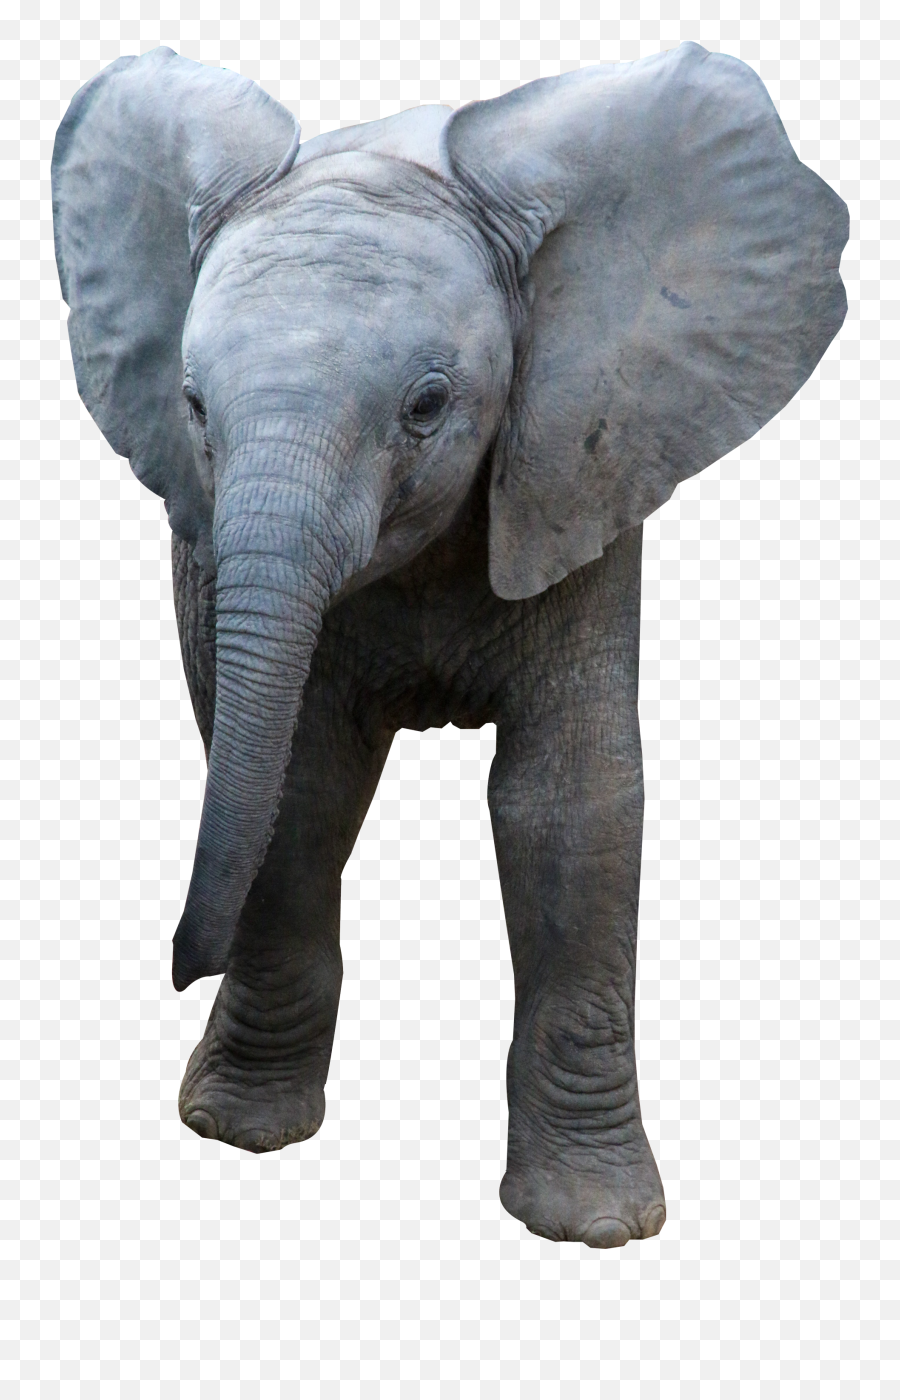 Elephant Png Transparent Image - Pngpix Emoji,Elephants Png